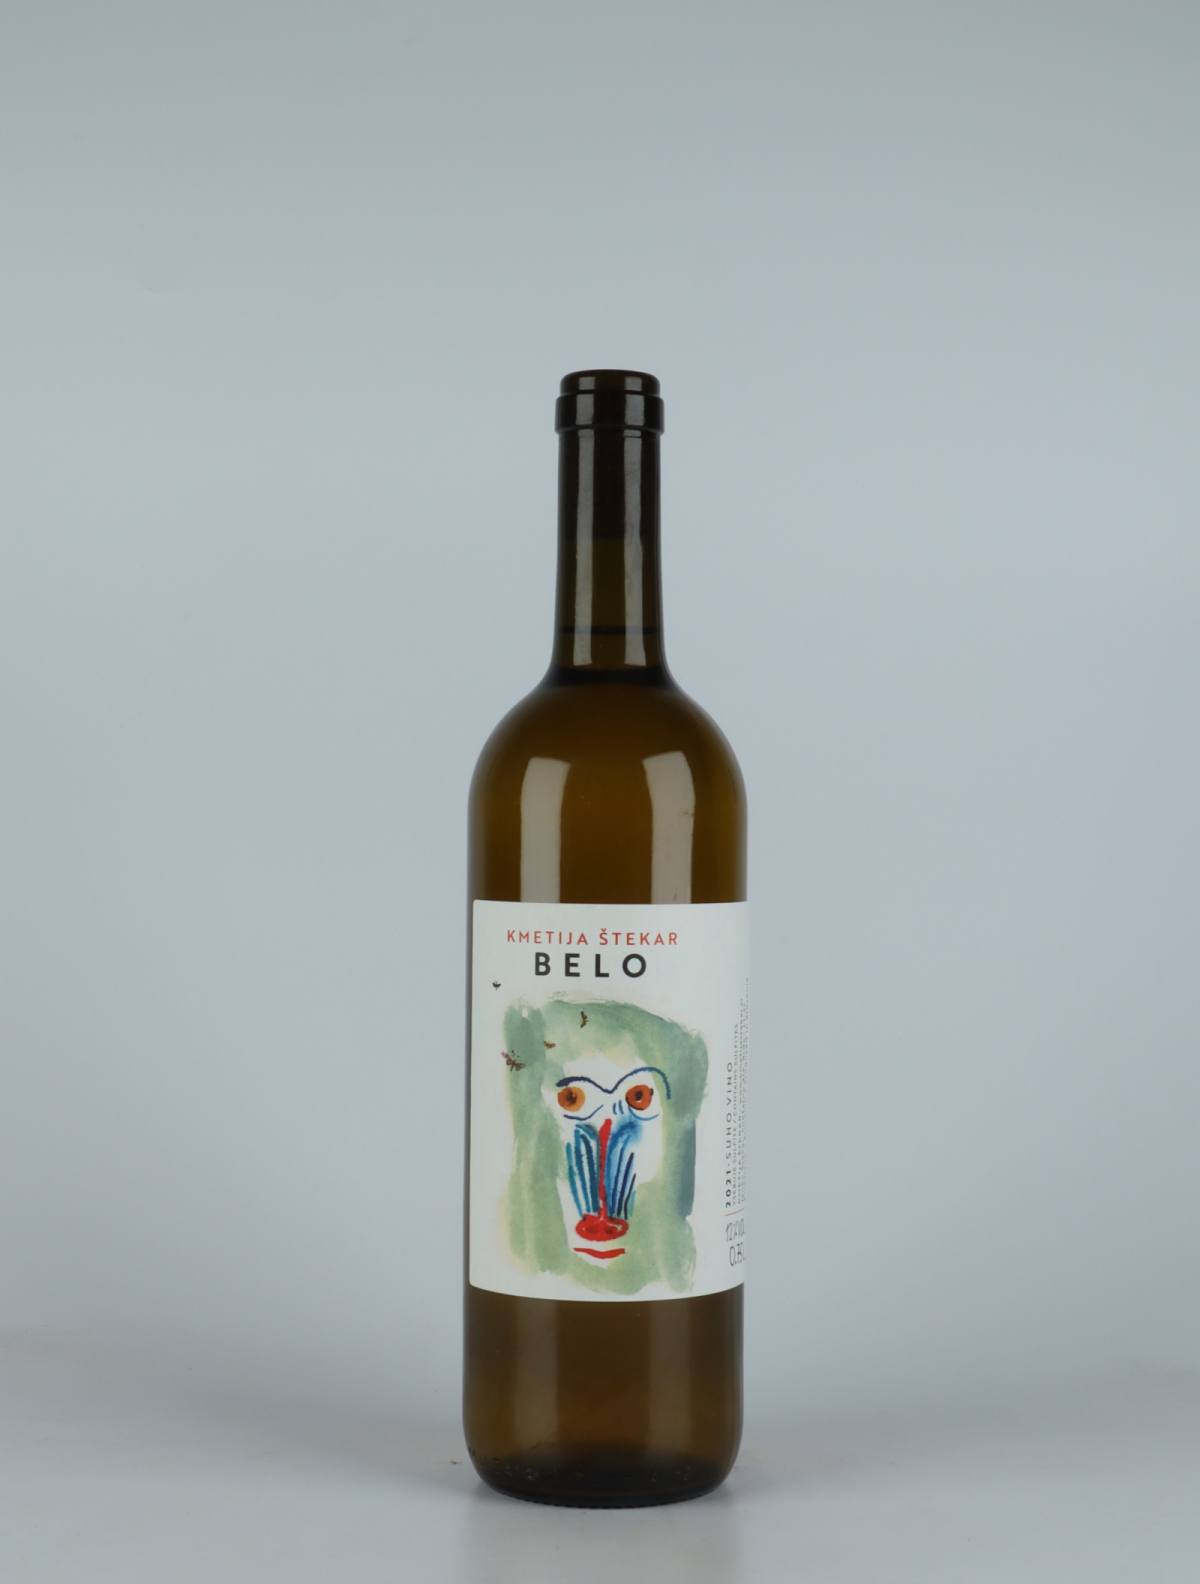 A bottle 2021 Belo White wine from Kmetija Stekar, Brda in Slovenia